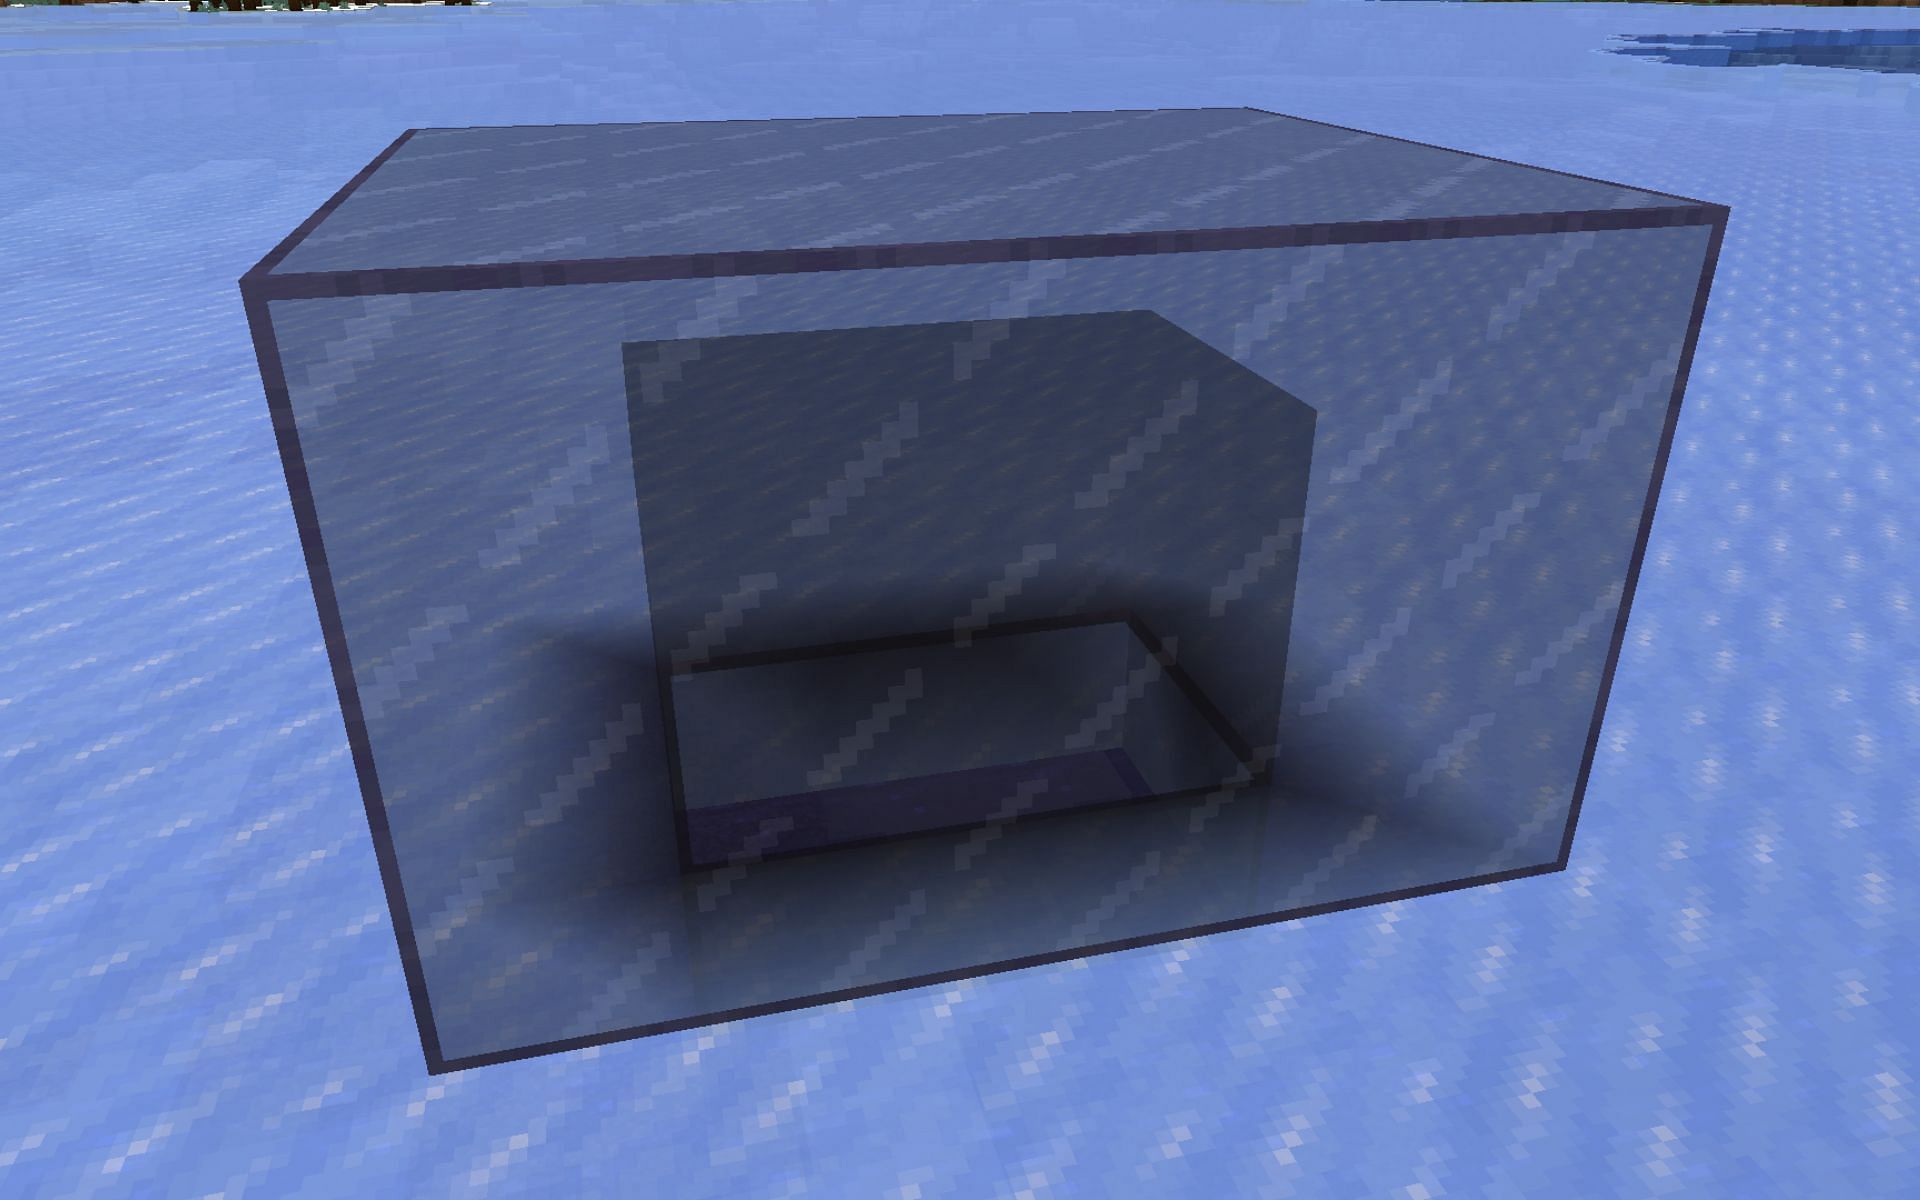 Tinted glass (Image via Minecraft)